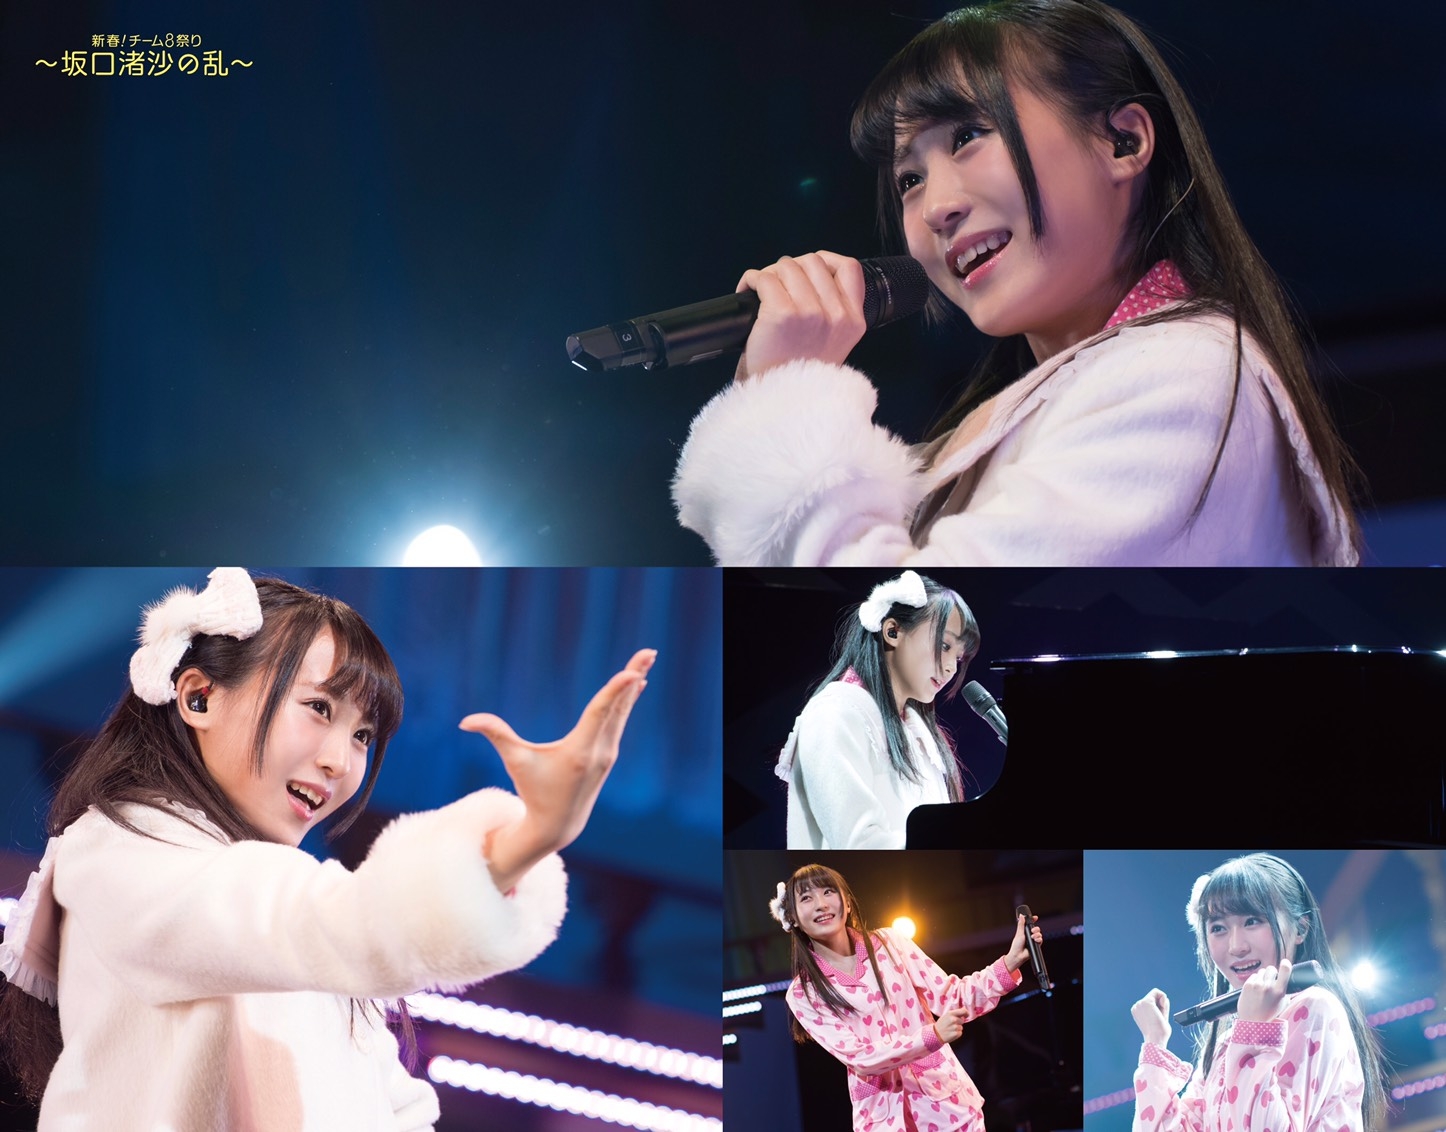 【BD】AKB48 Team 8 SOLO CONCERT 新春！チーム8祭り